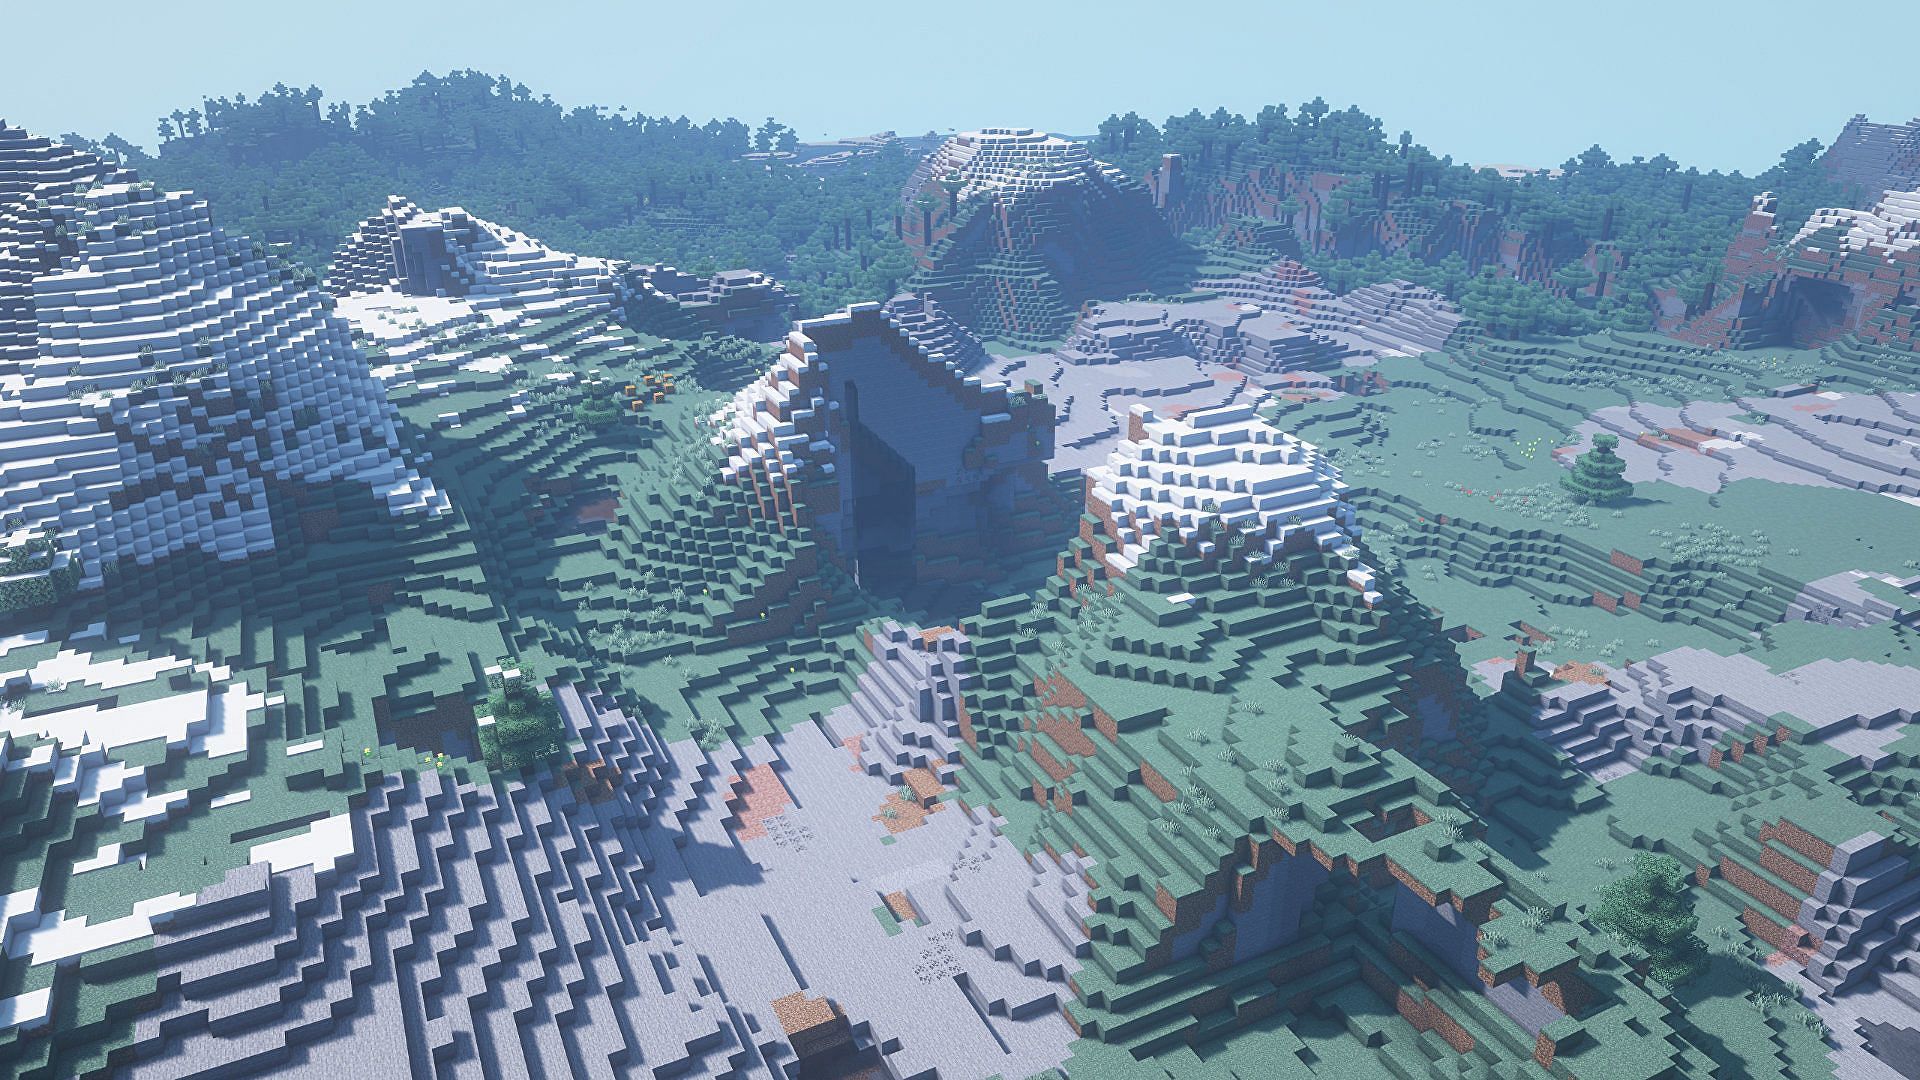 Huge mountains in Minecraft (Image via Minecraft)